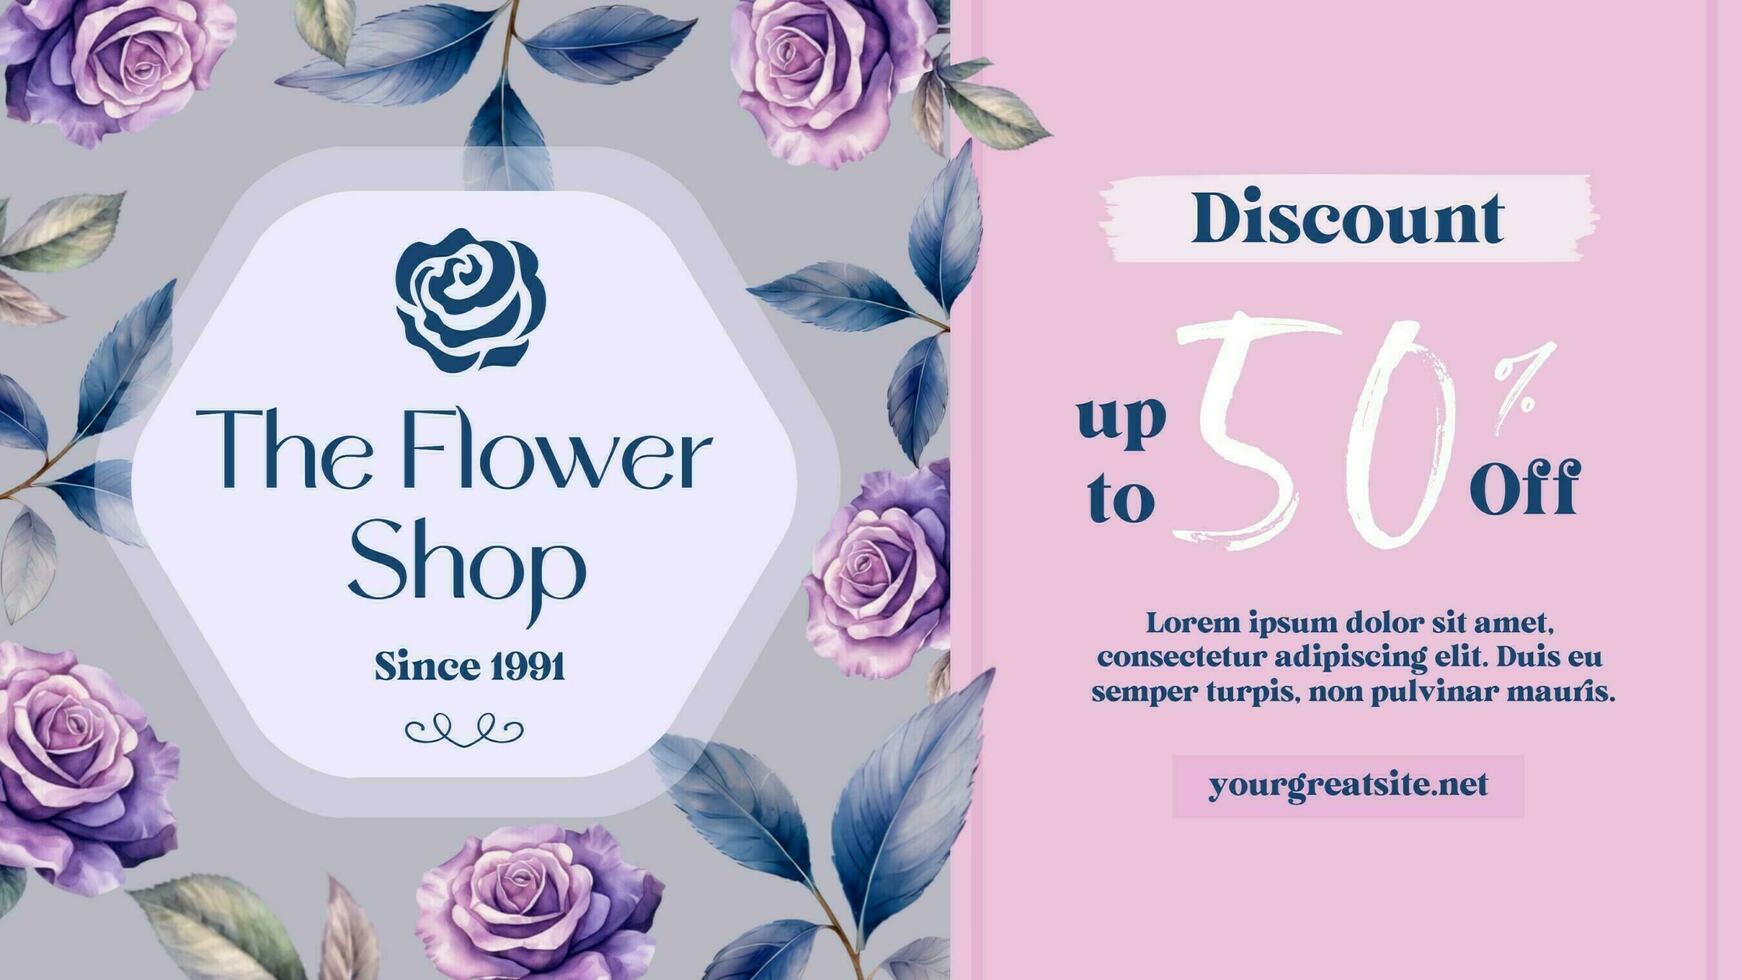 Floral Flower Shop Twitter Post template